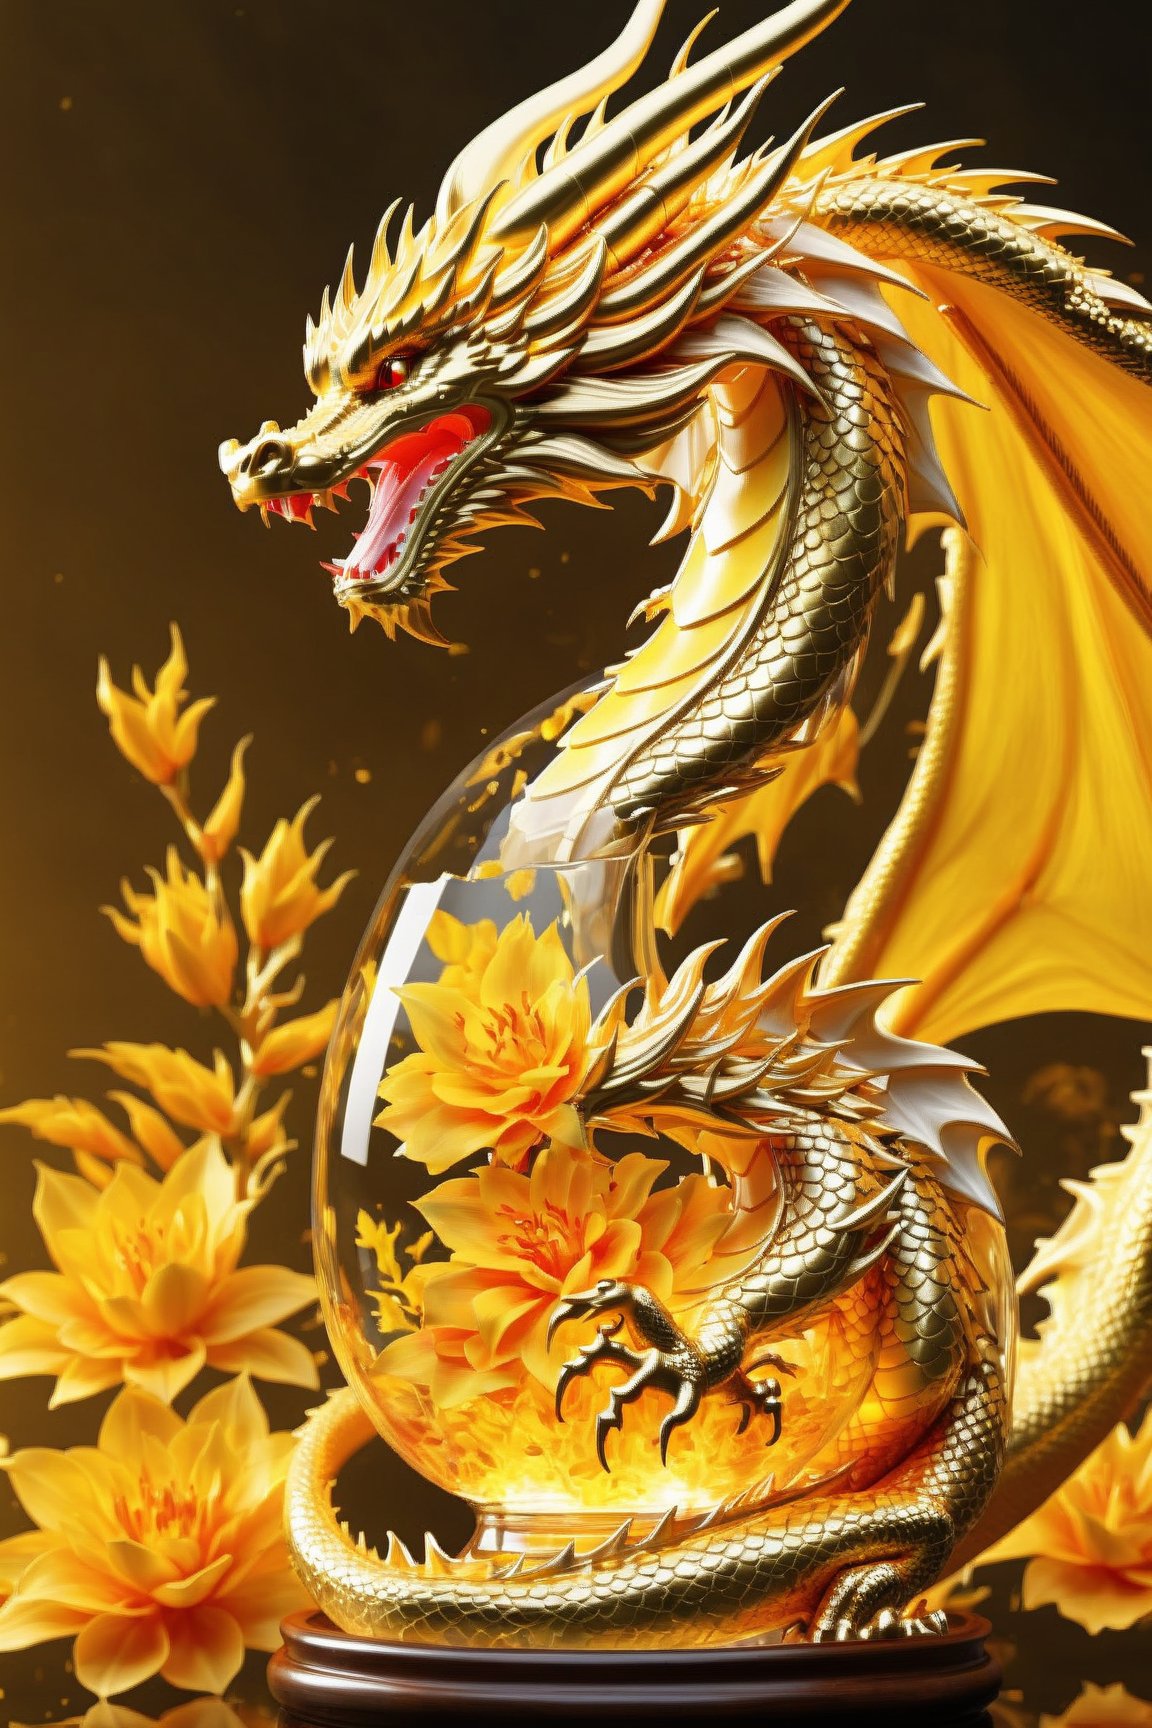 Generate hyper realistic DRAGON,in the glass bottle,
Flower,liquid fire,dragon,Bottle,Dragon,golden dragon